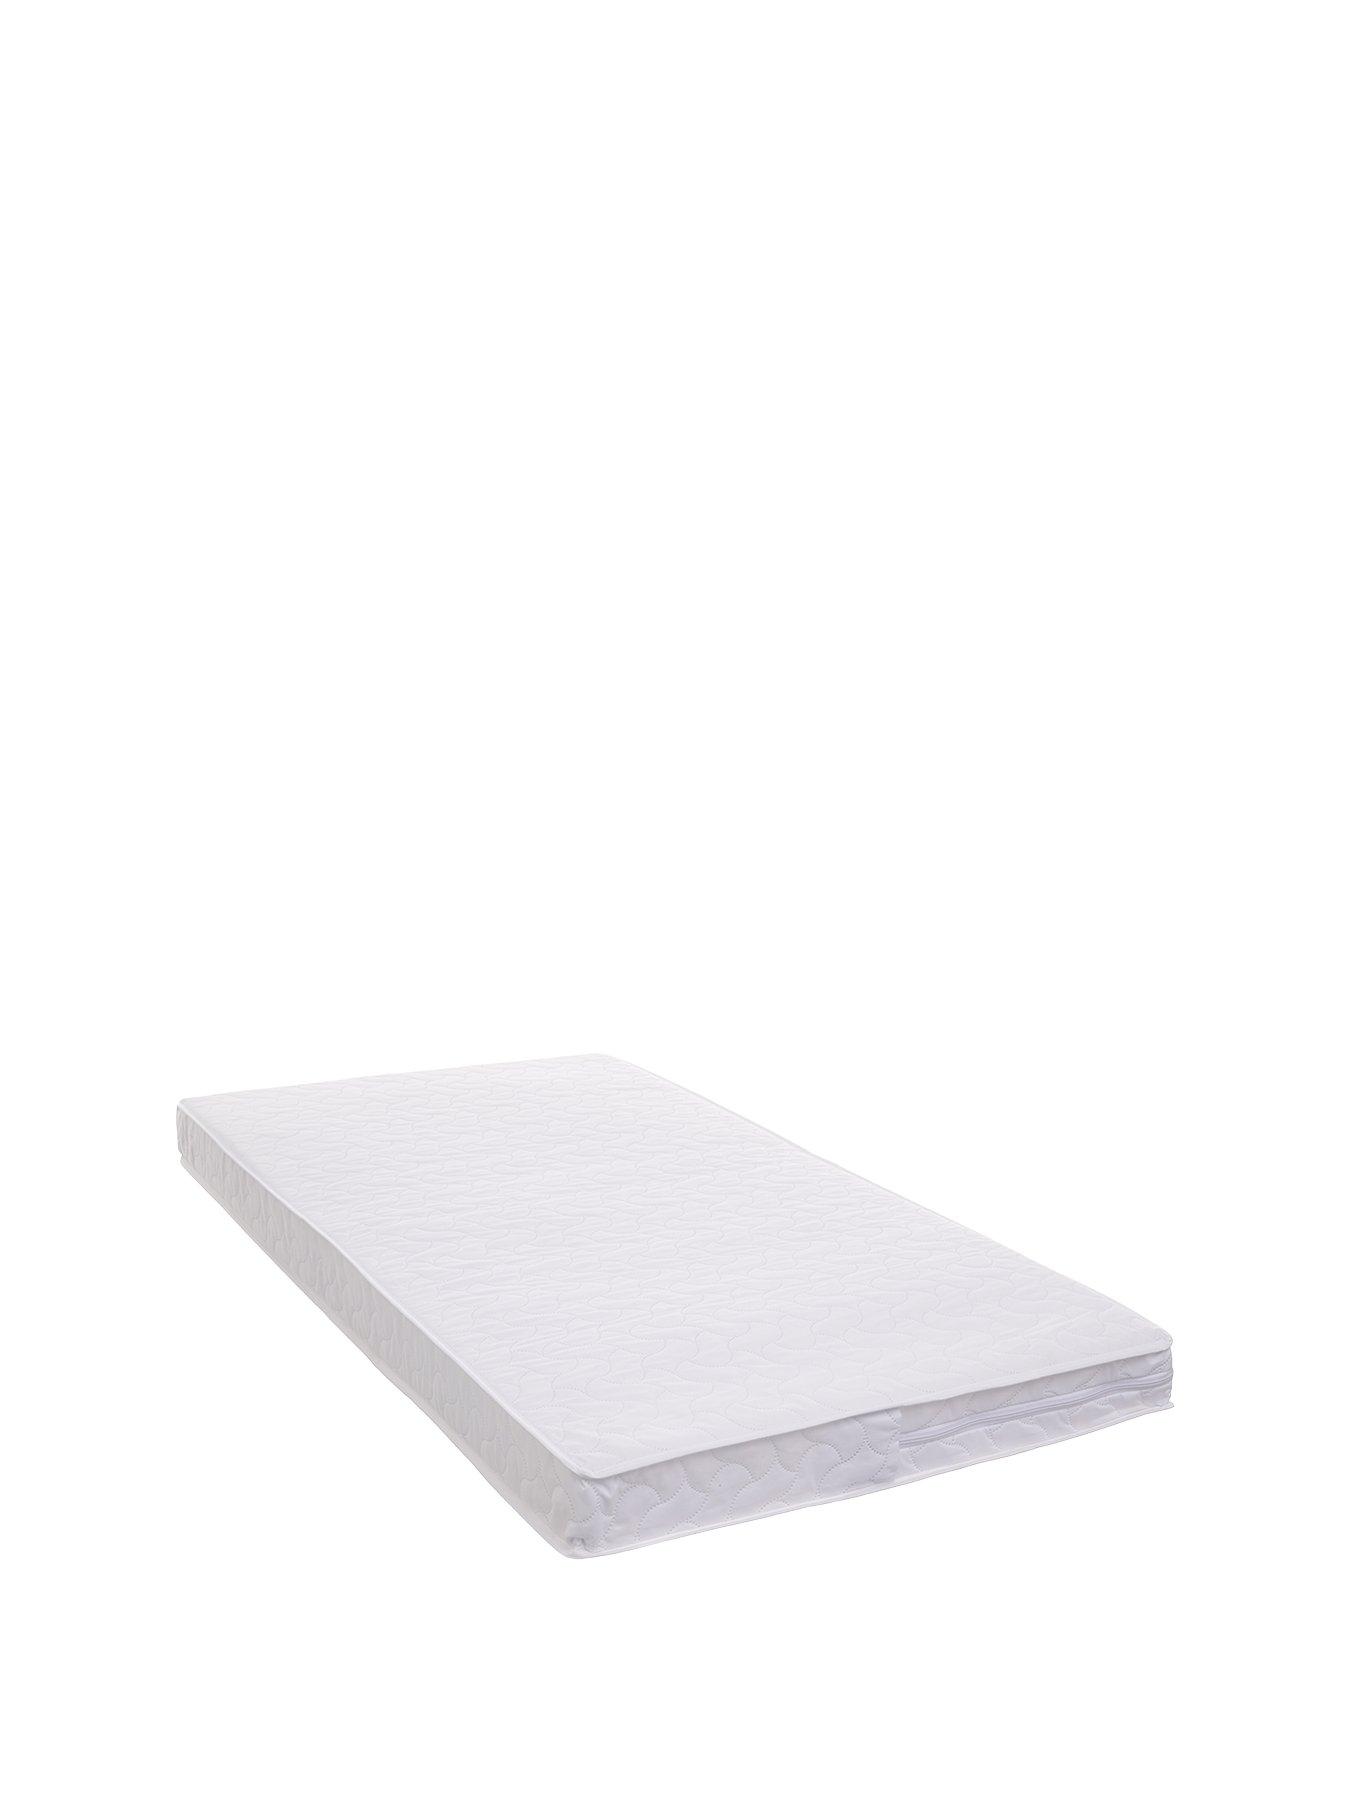 ~60 x 90 x 7.5cm Dog Bed Mattresses Memory Foam for Cushions 24" x 36" x 3" 